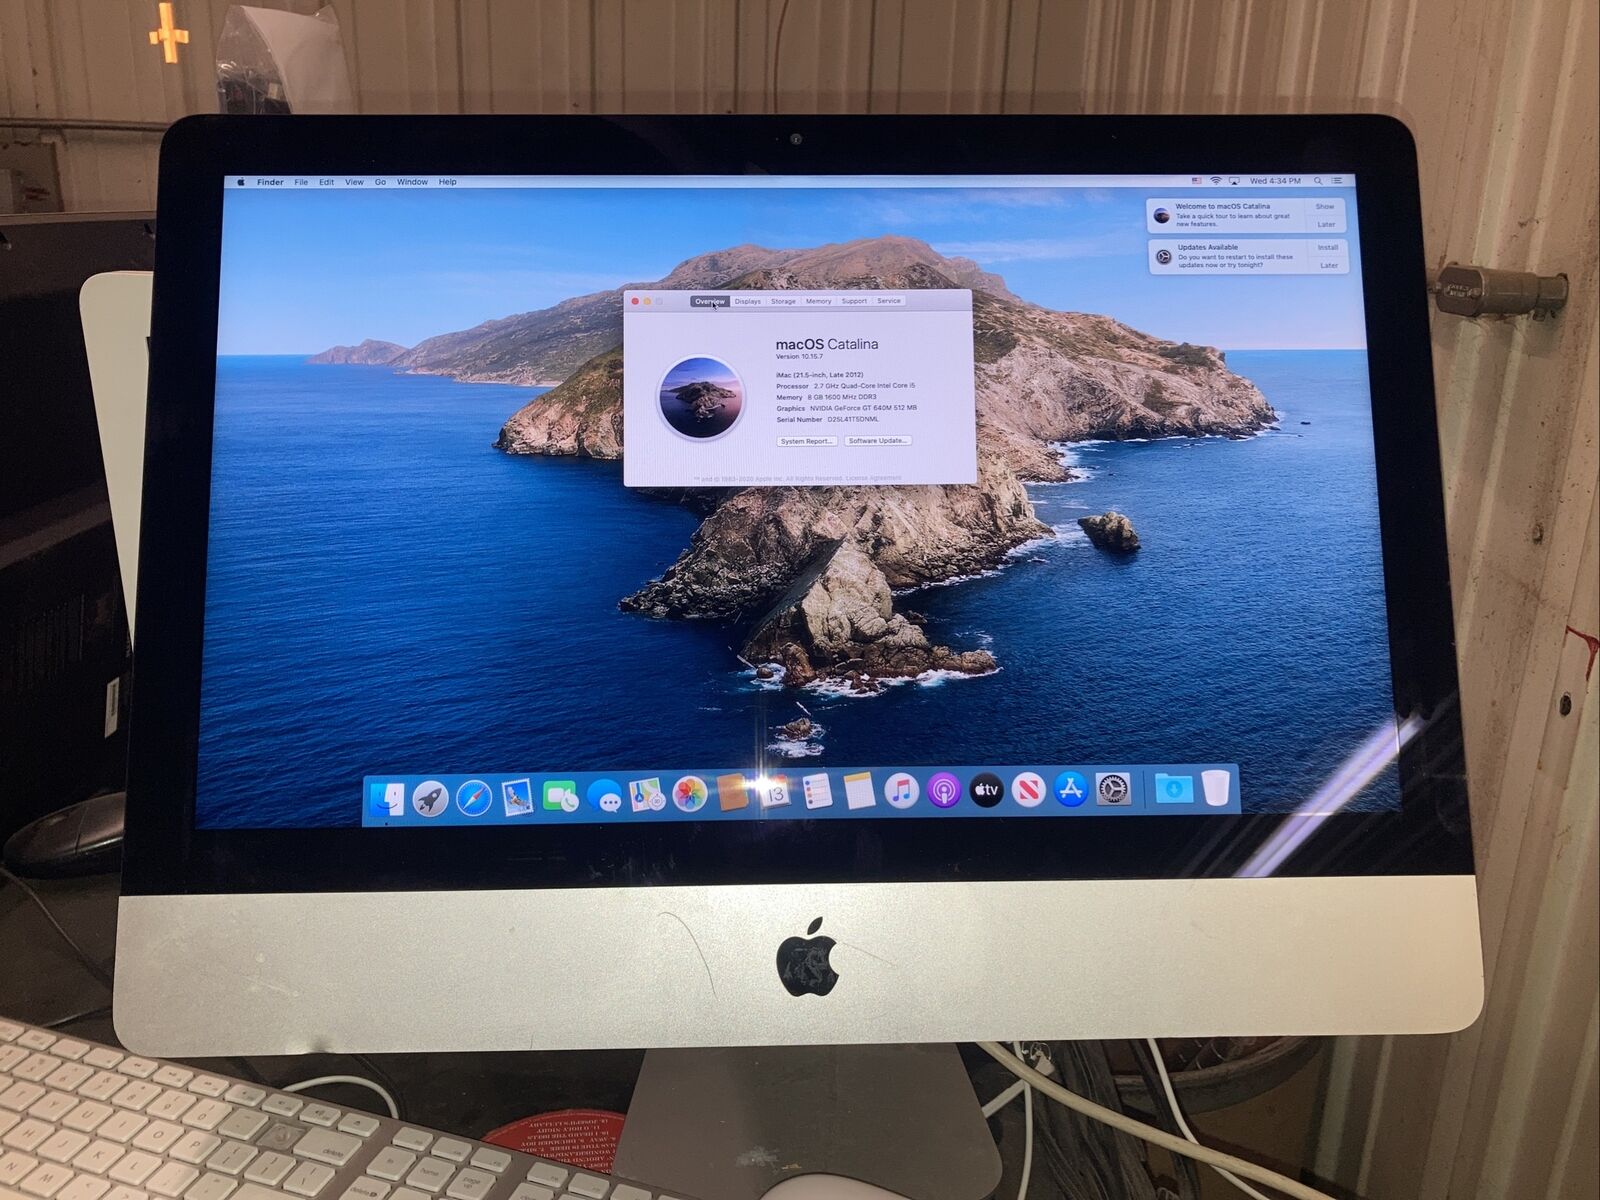 Apple iMac (21.5-inch Late 2012) 2.7GHz i5, 8GB Ram, 1TB HDD, OS Catalina 